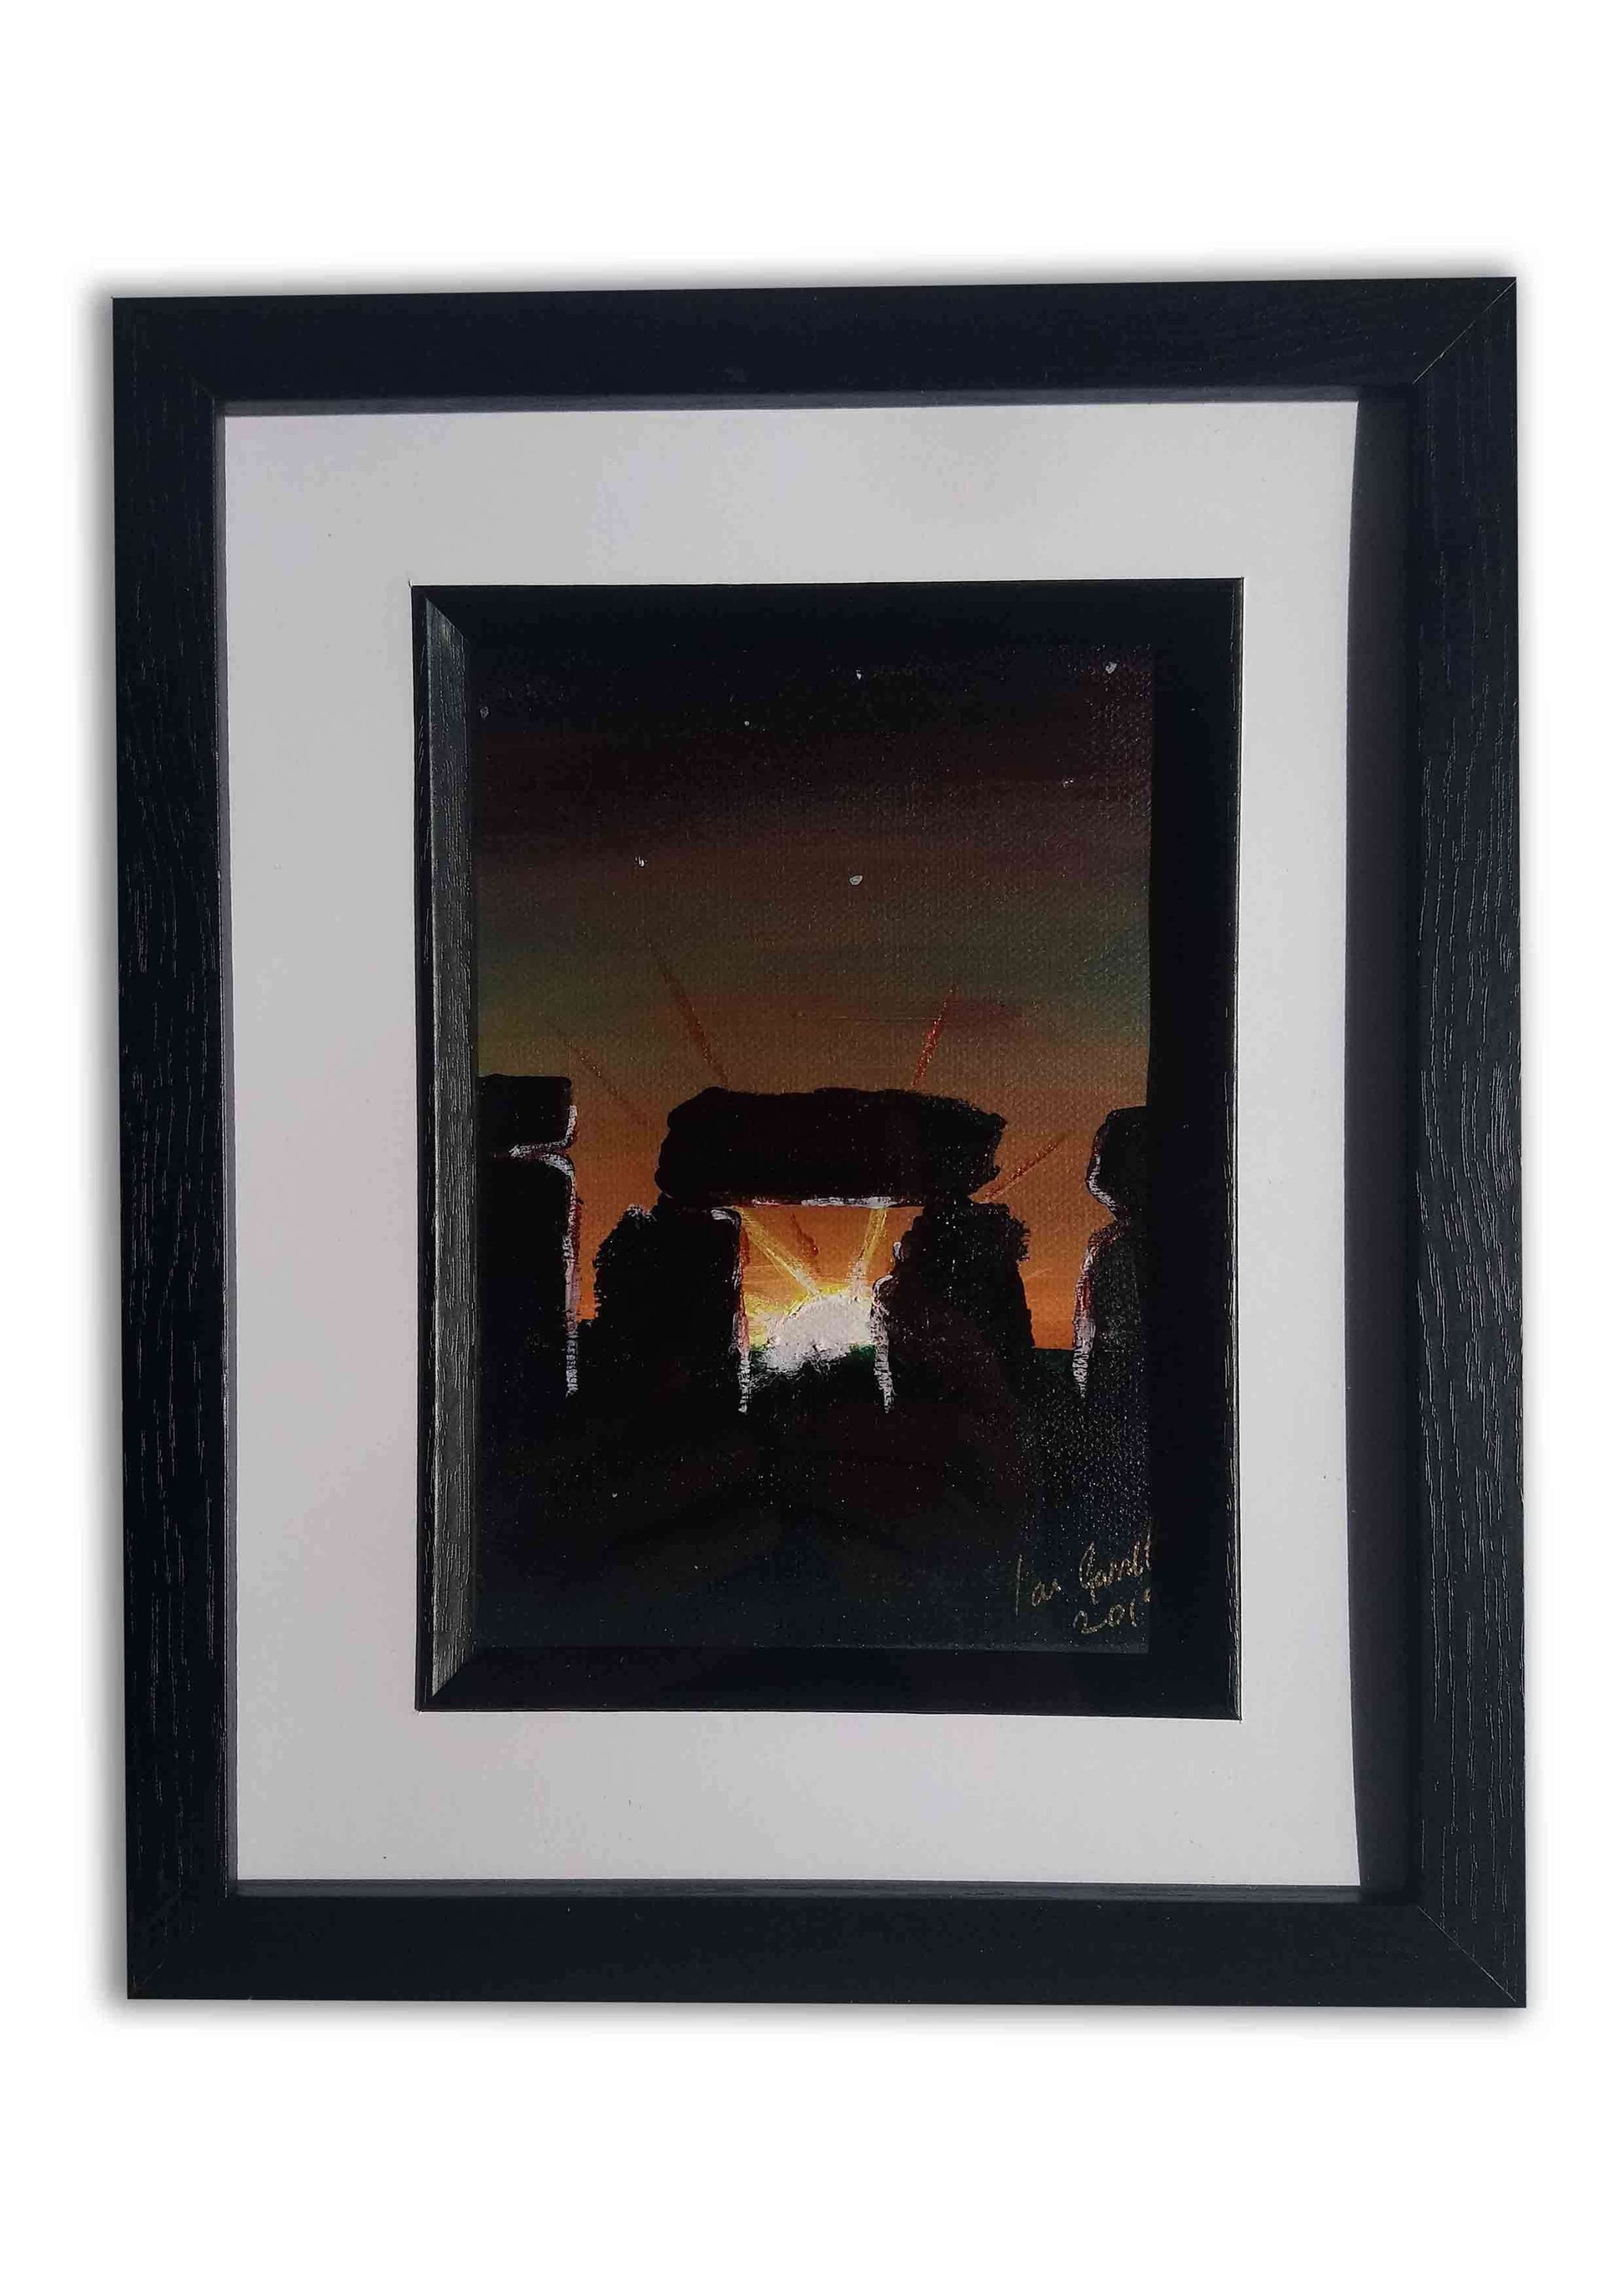 Solstice at Stone Henge, ©Ian Garrett 2019.  Acrylic on Canvas 7 x 5 inches.